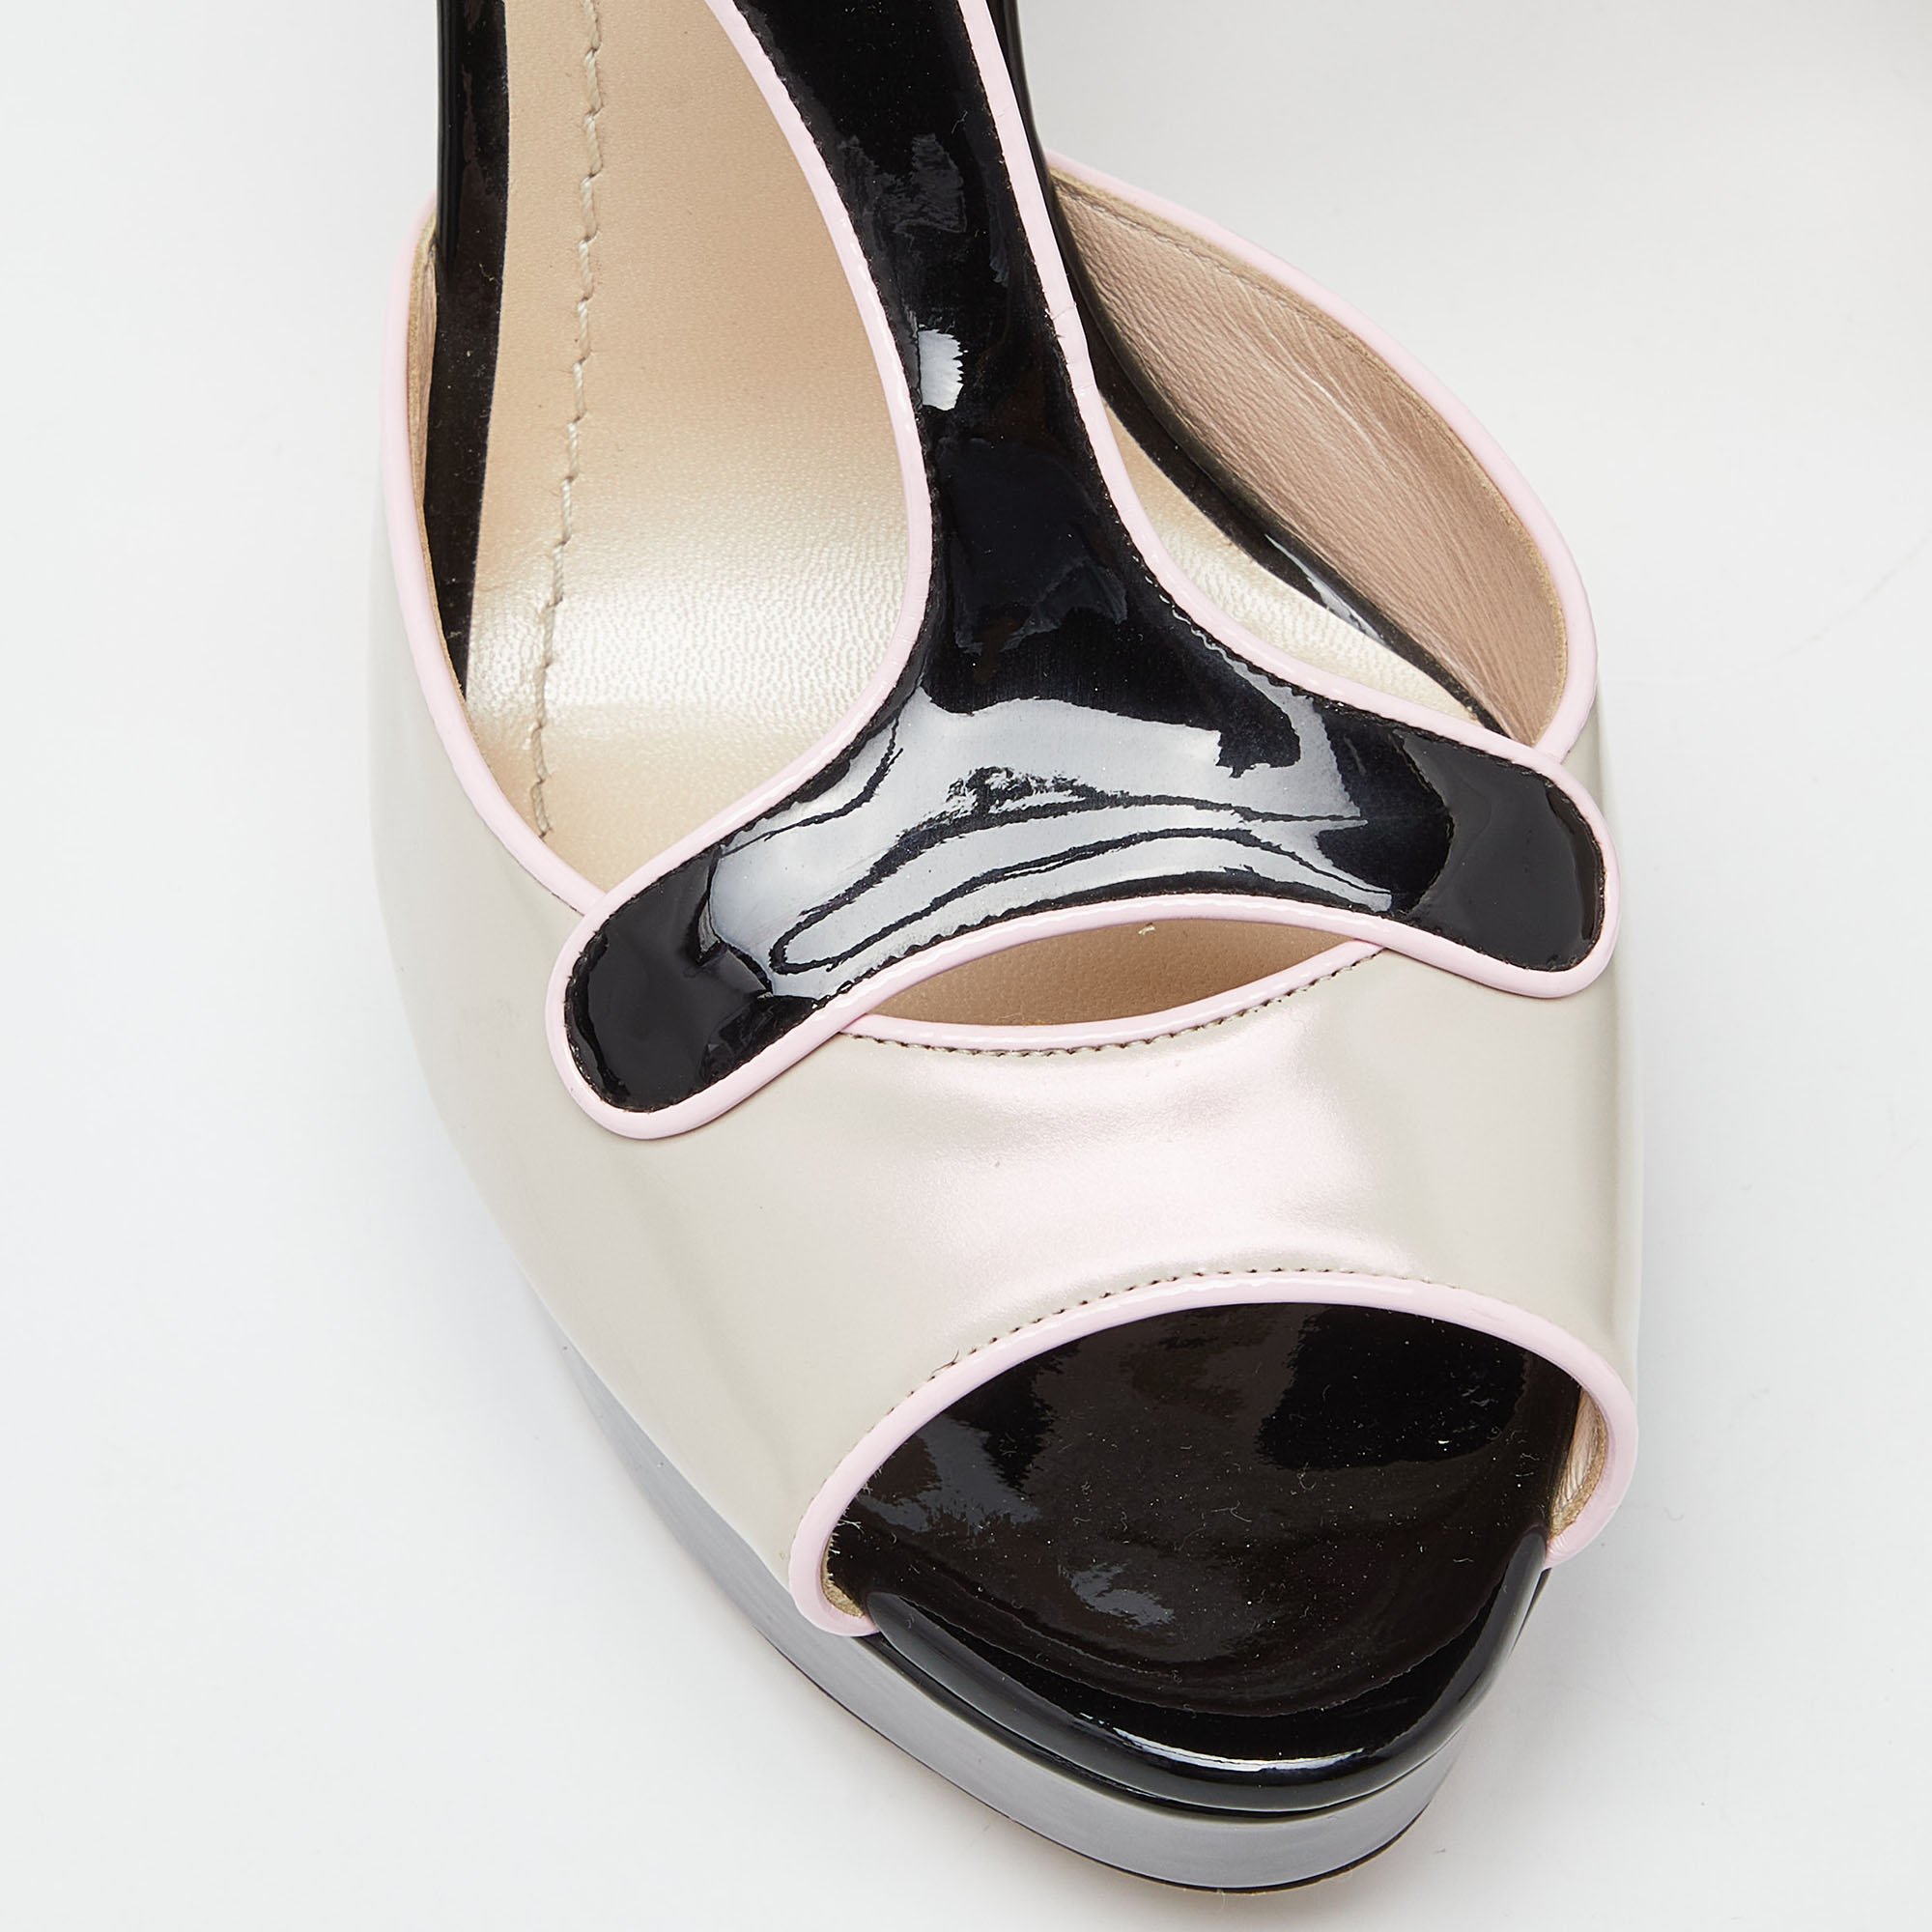 Dior Tri Color Patent Leather Platform Ankle Strap Sandals Size 37.5